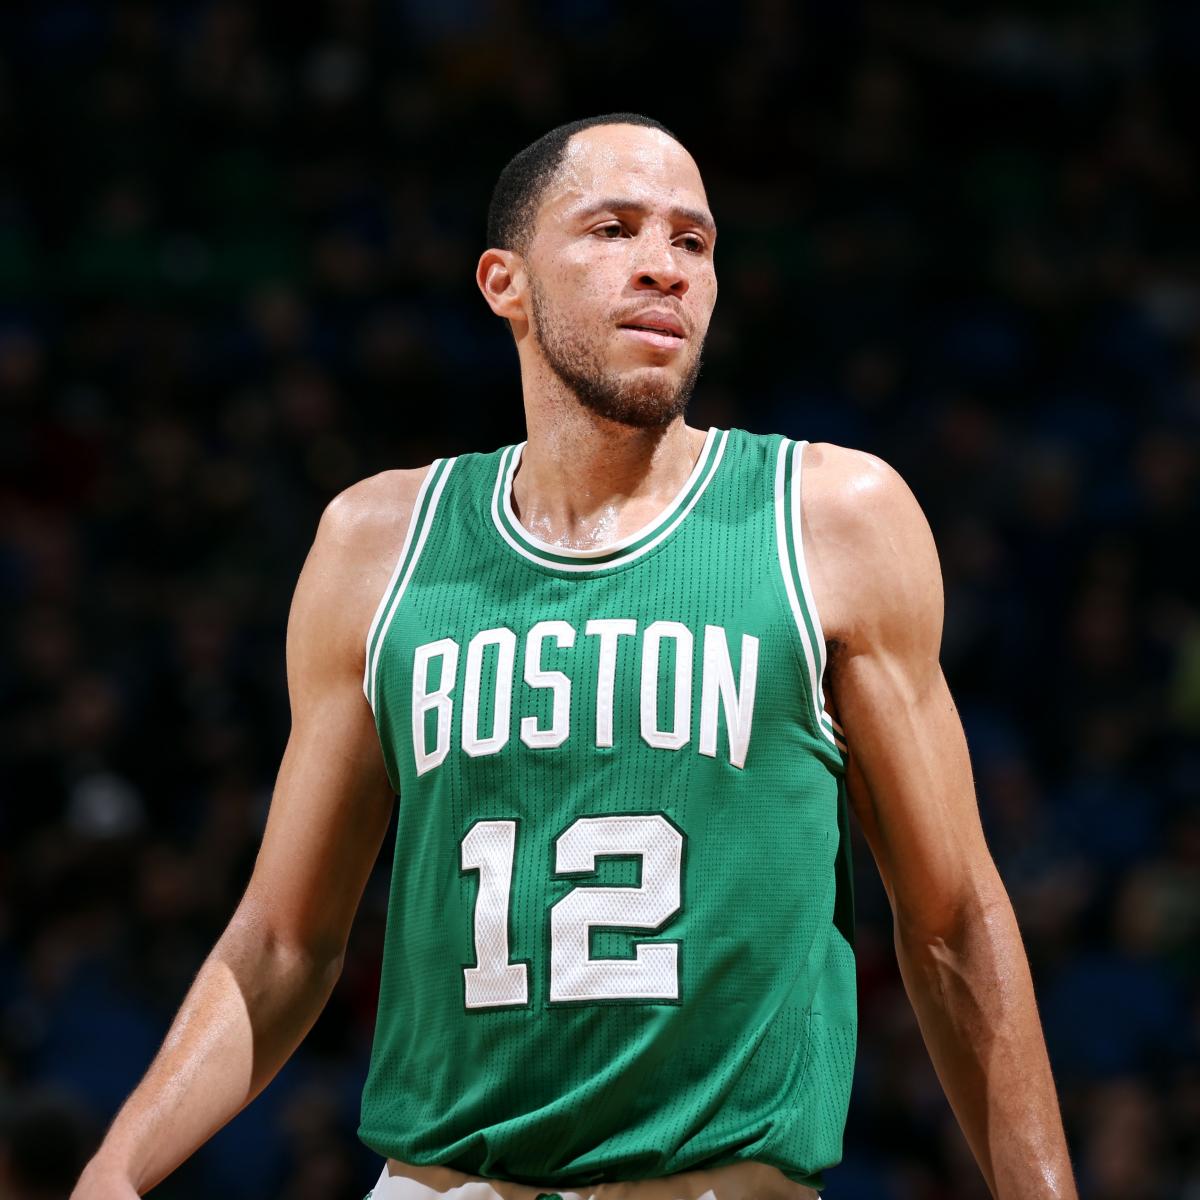 Boston Celtics player of the week - Tayshaun Prince - CelticsBlog